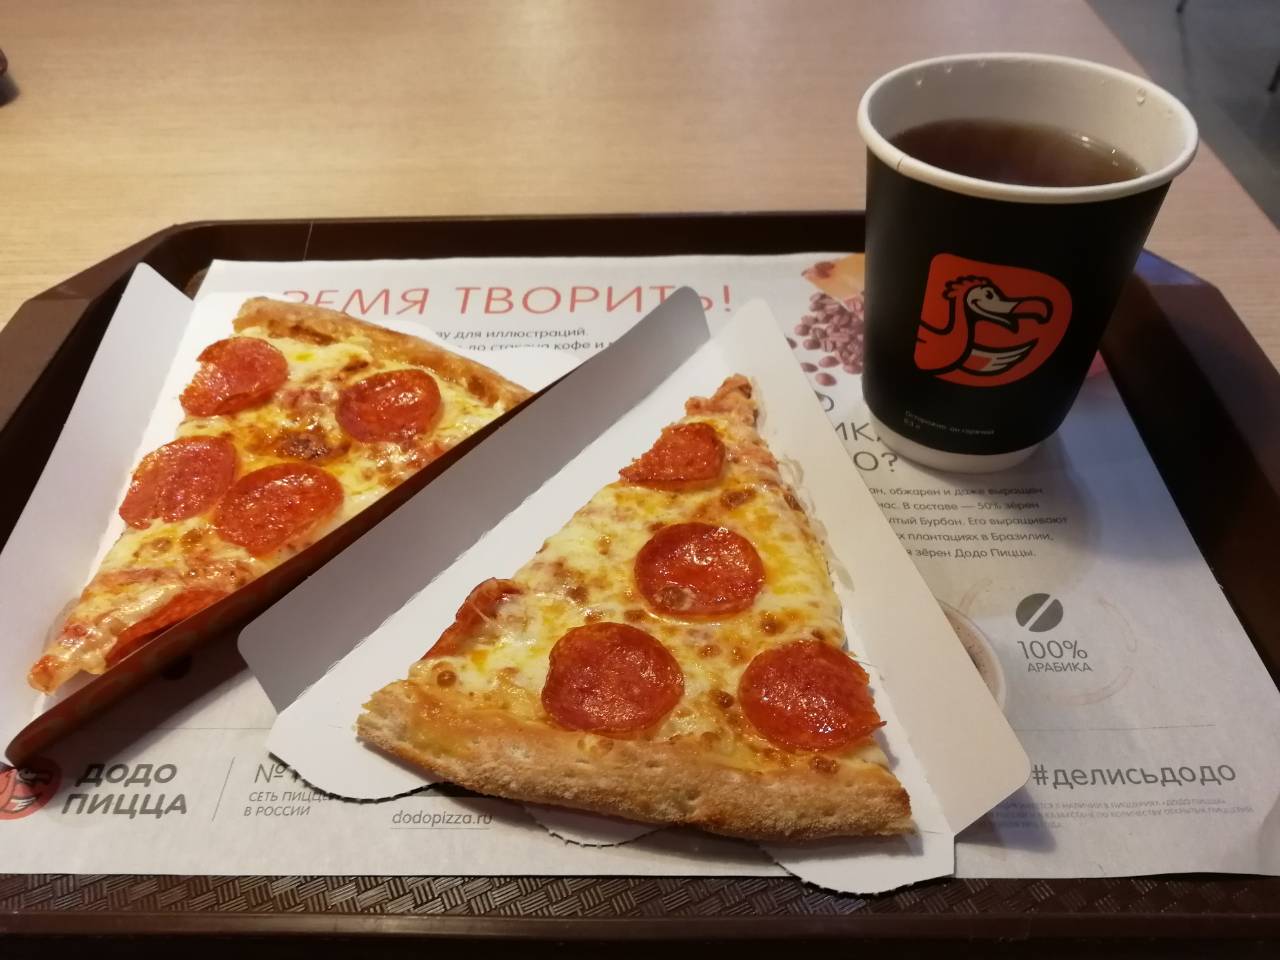 сколько стоит пицца пепперони в додо пицце фото 52